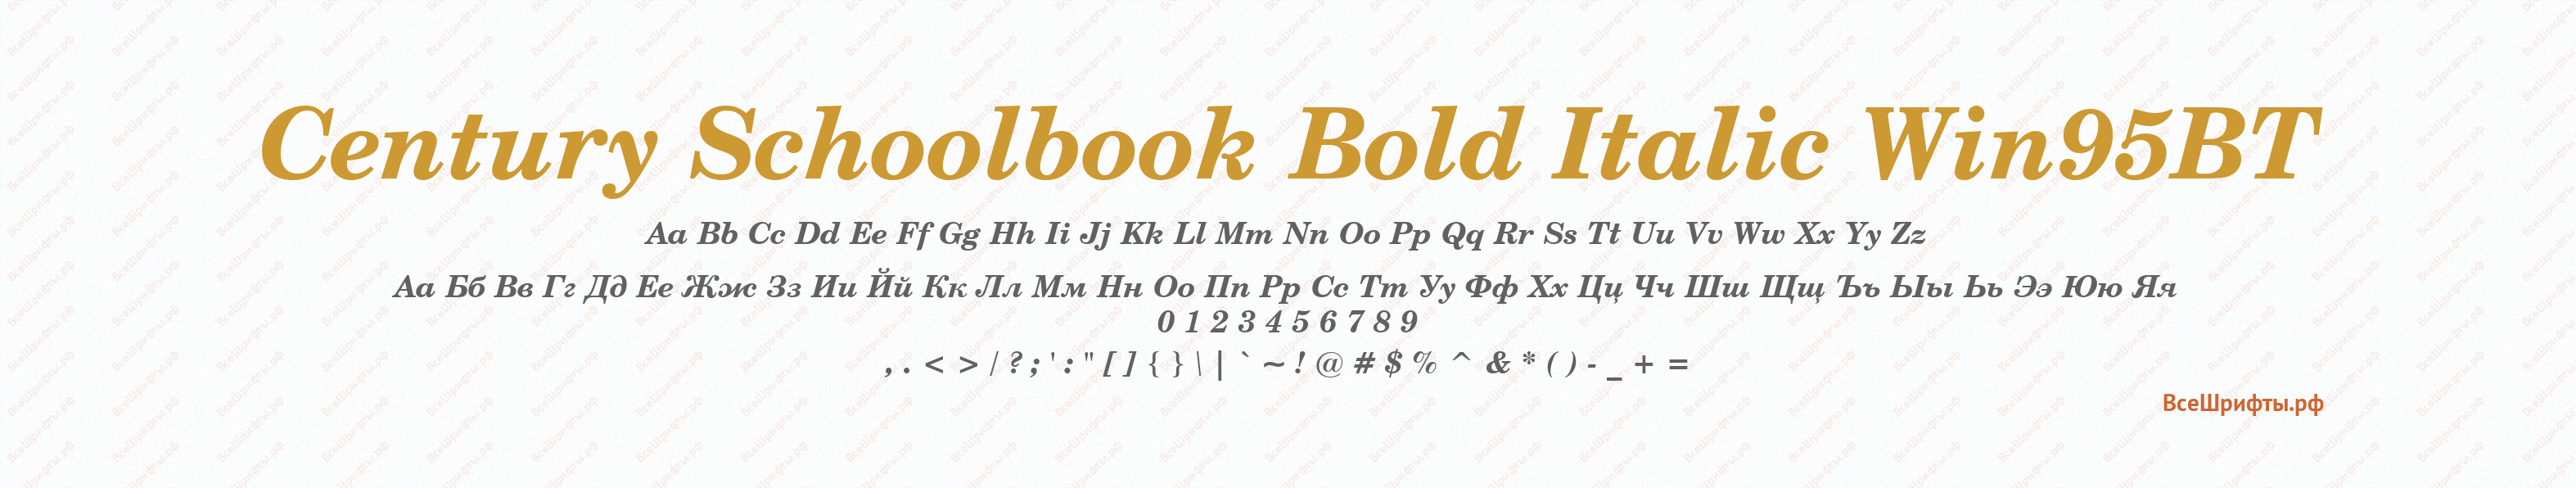 Шрифт Century Schoolbook Bold Italic Win95BT